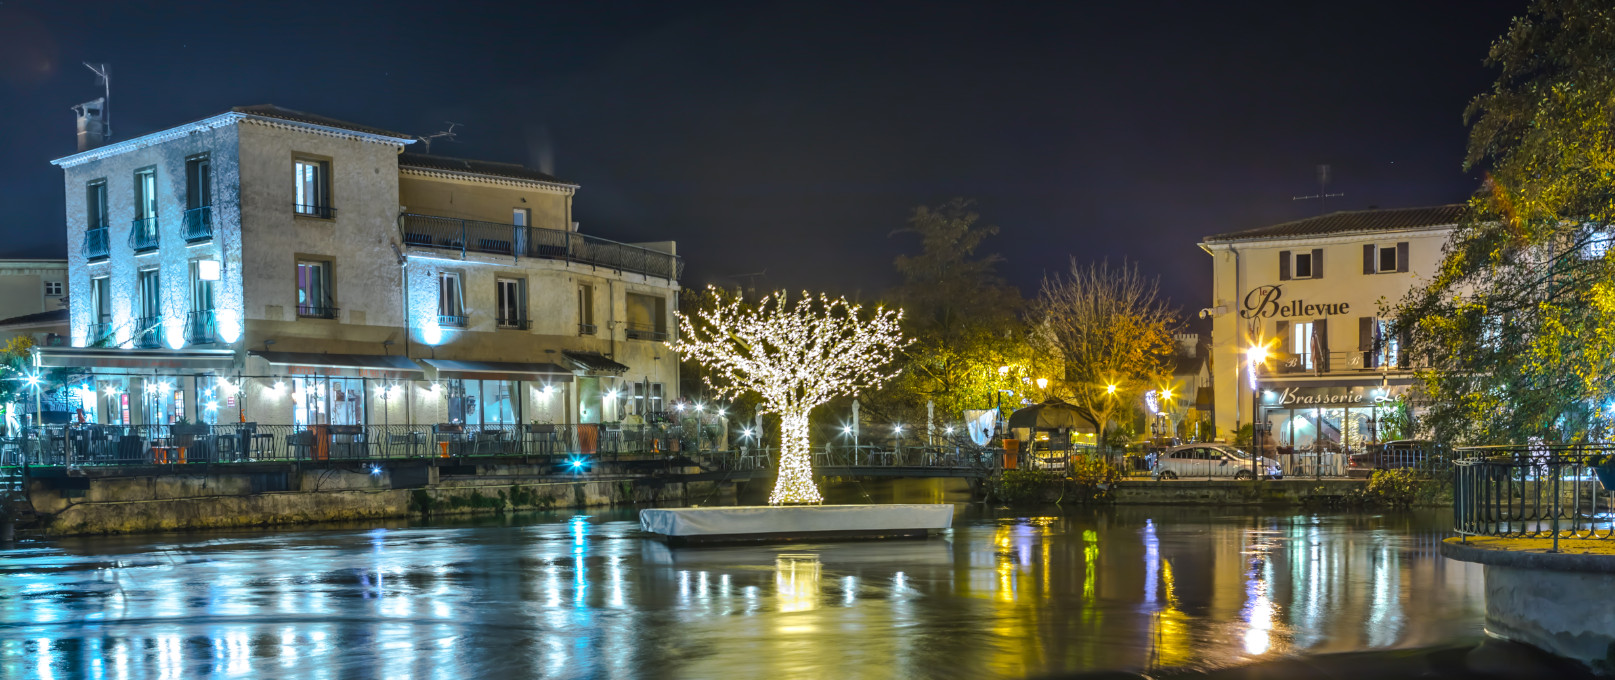 Top des illuminations de Noël en Vaucluse © Kessler